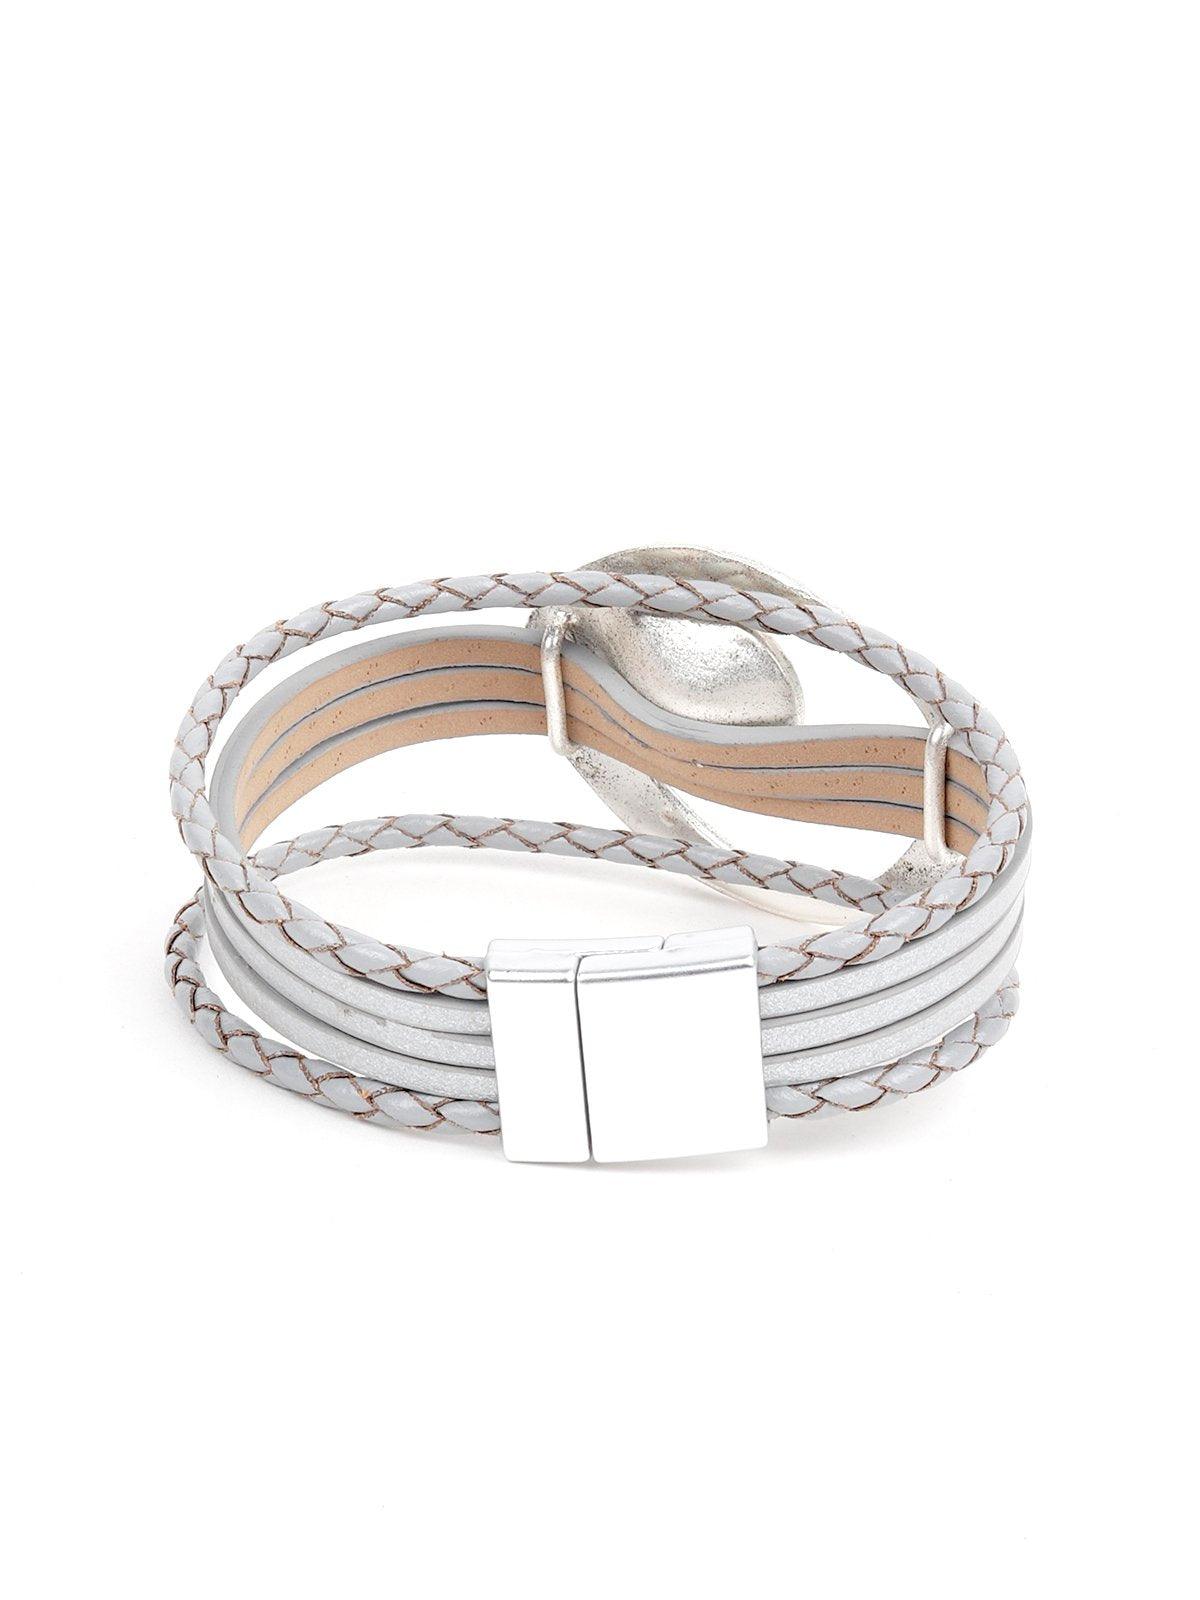 Fau x  Leather Grey Layered Wrap Bracelet - Odette